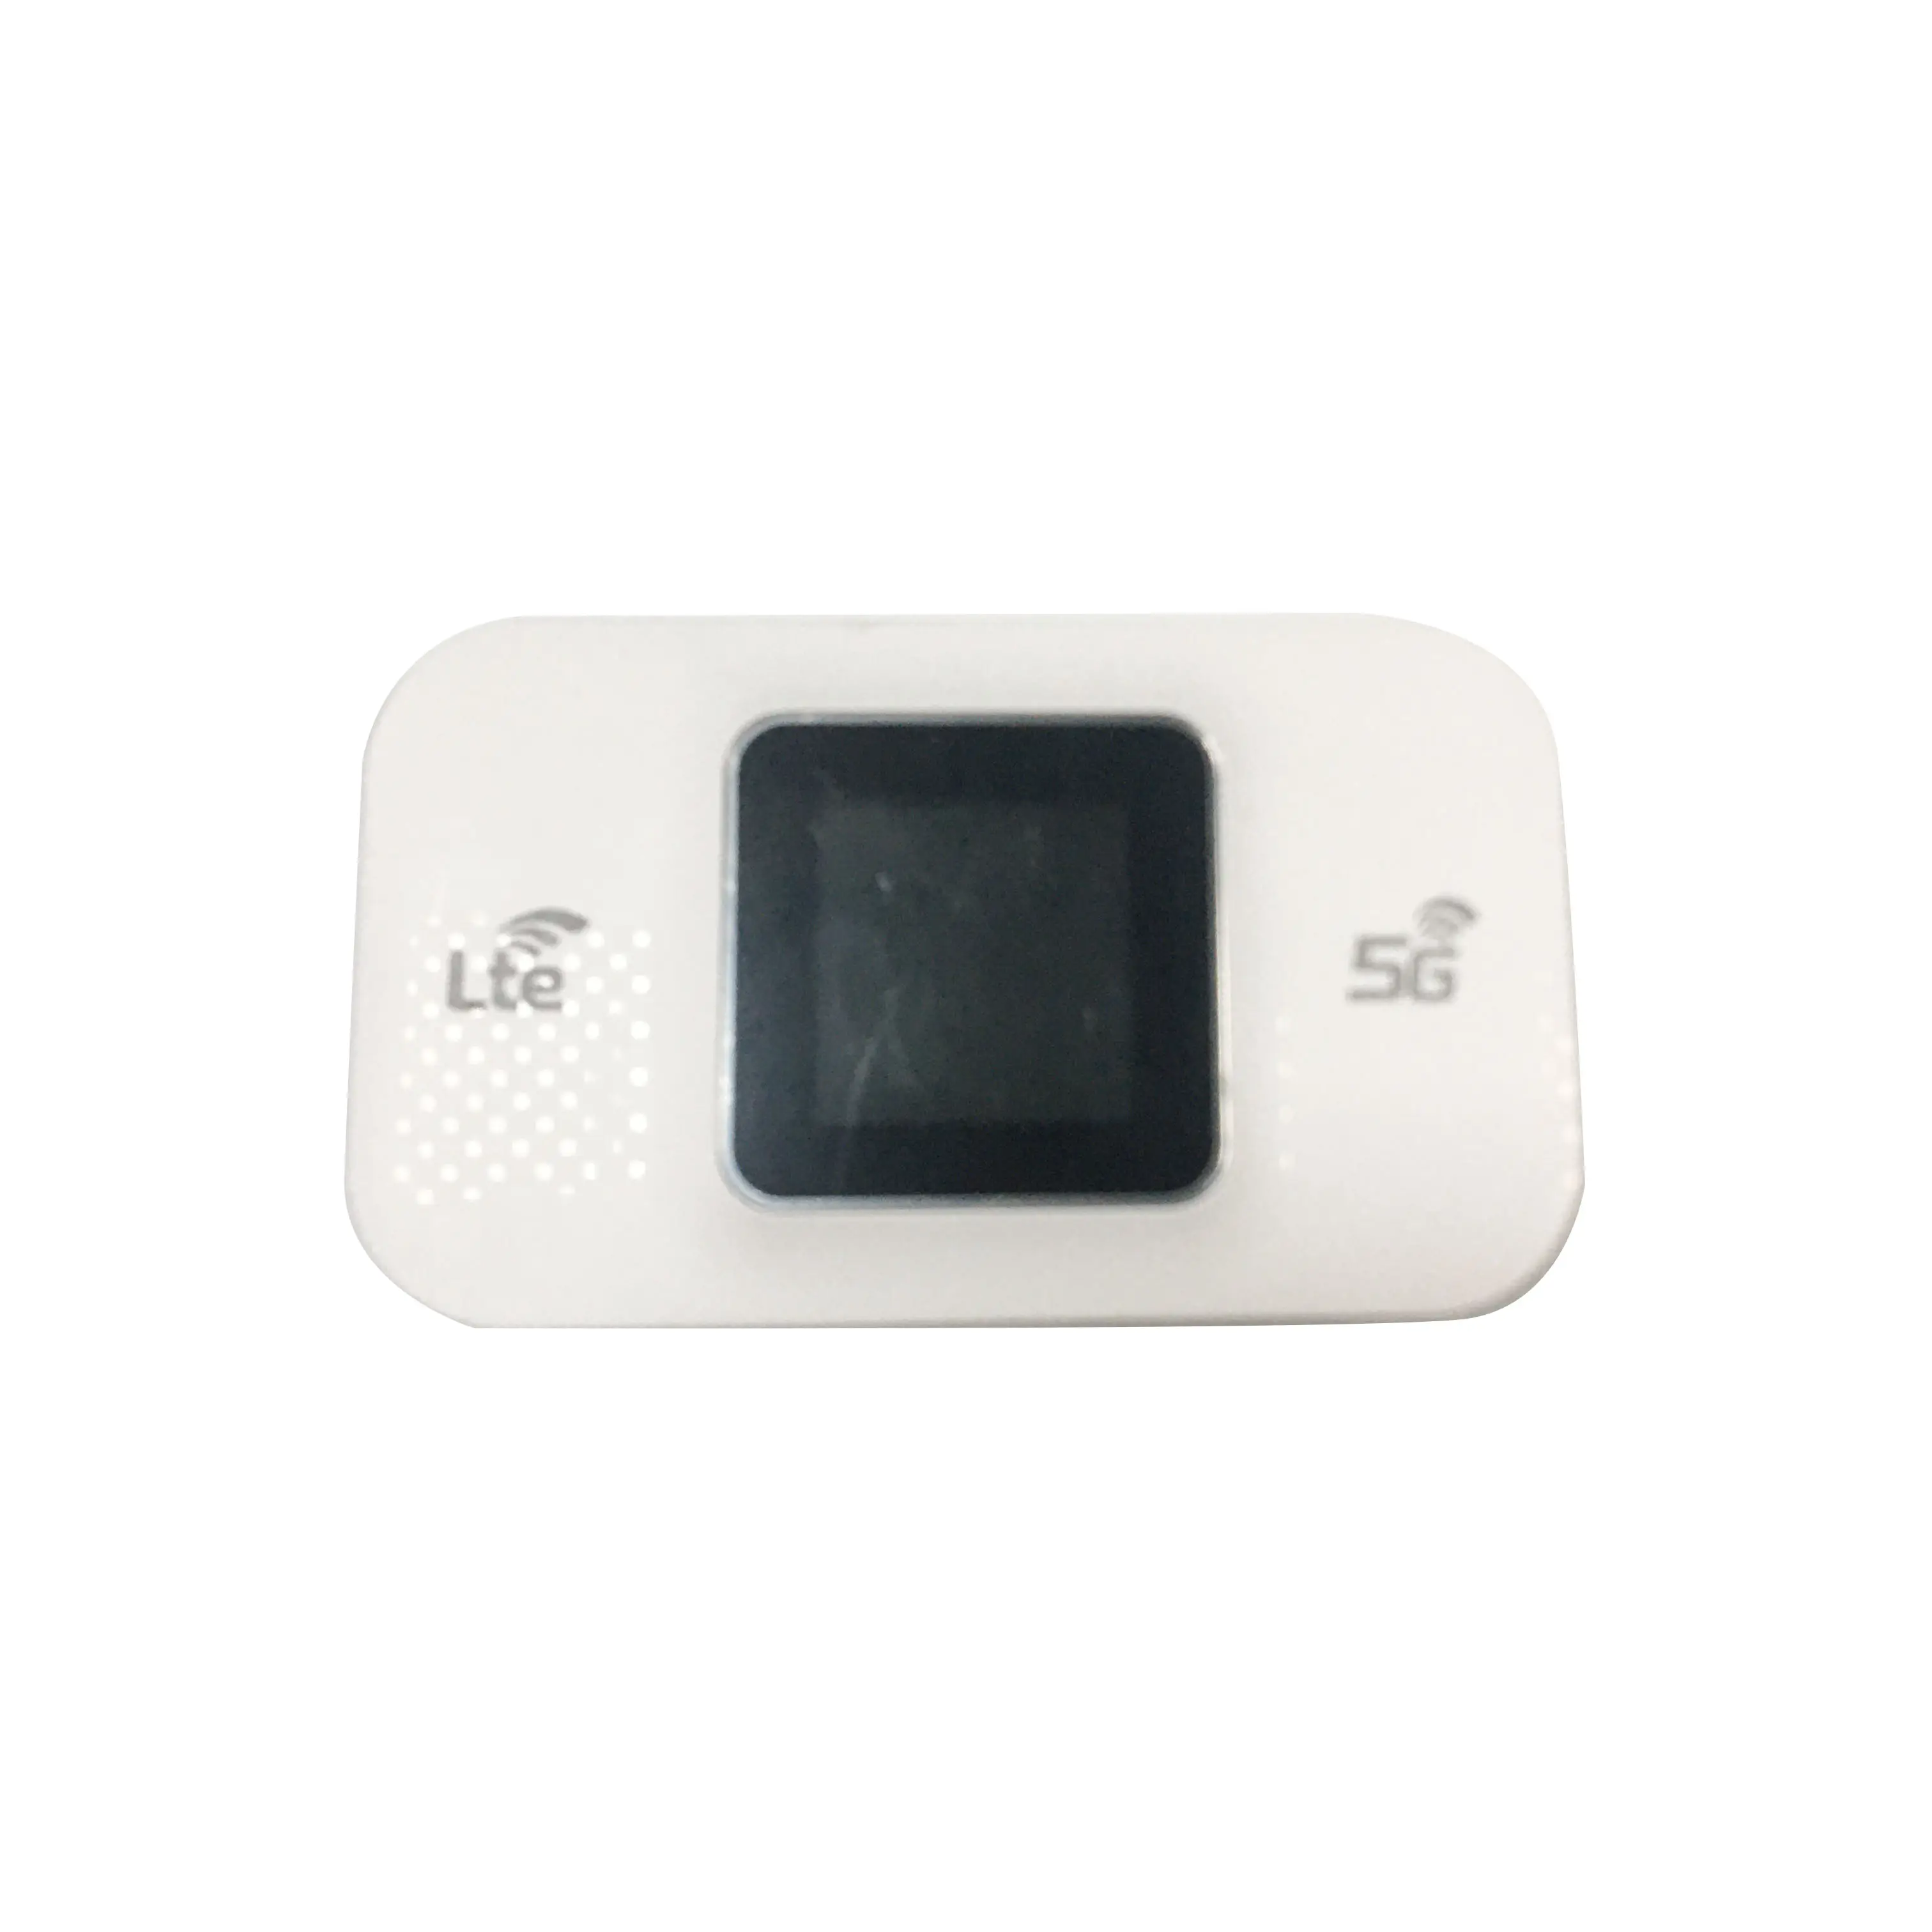 E5785-Pro ฮอตสปอตมือถือ4G เราเตอร์ WiFi มือถือปลดล็อค LTE อินเทอร์เน็ตขั้นสูงกระเป๋า